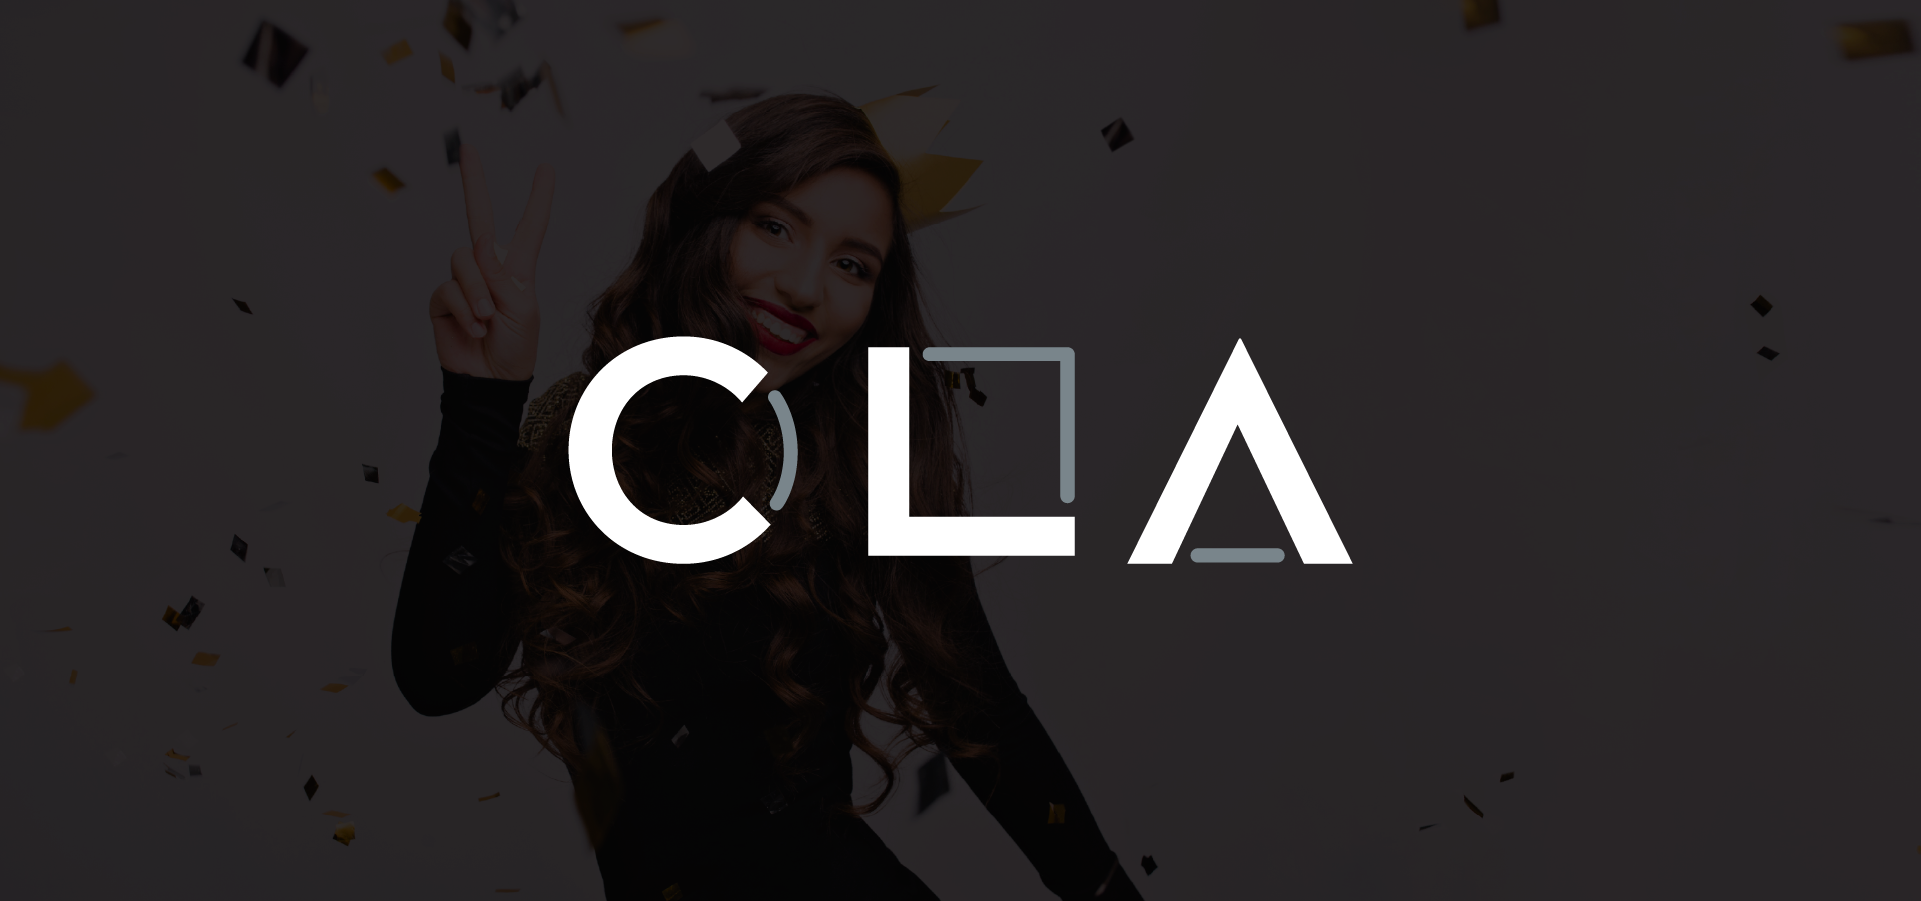 cla 02 1920X900 | CLA服飾電商品牌建構專案 | Labsology 法博思品牌顧問公司